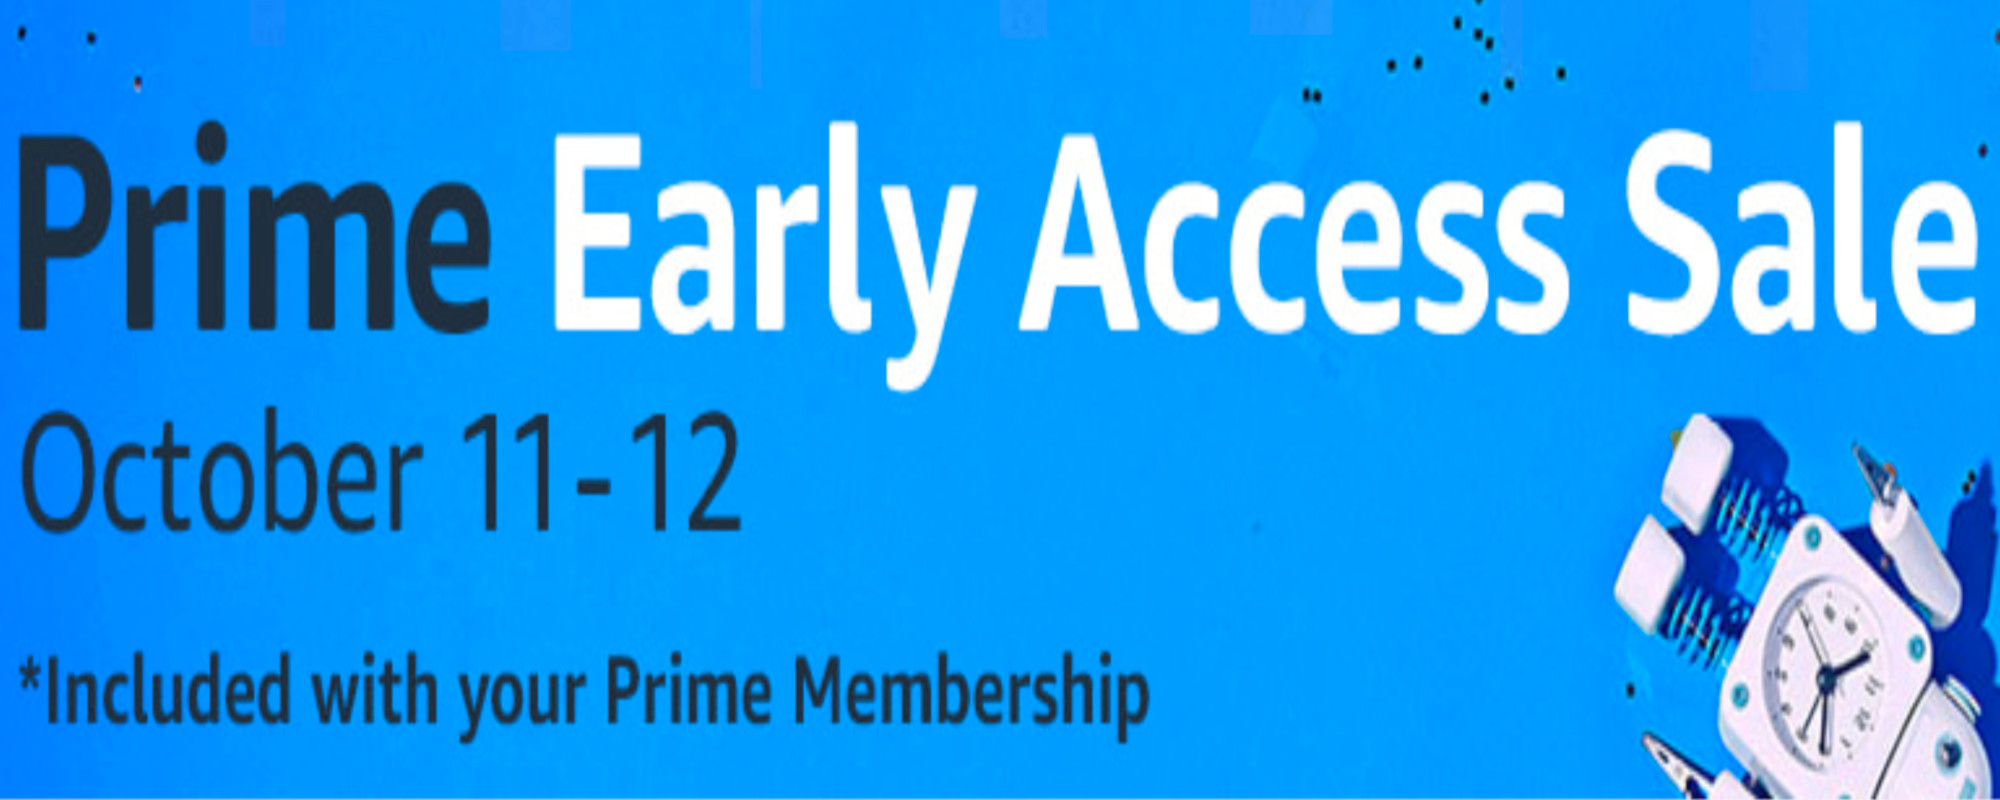 Prime Early Access Sale: Best Deals